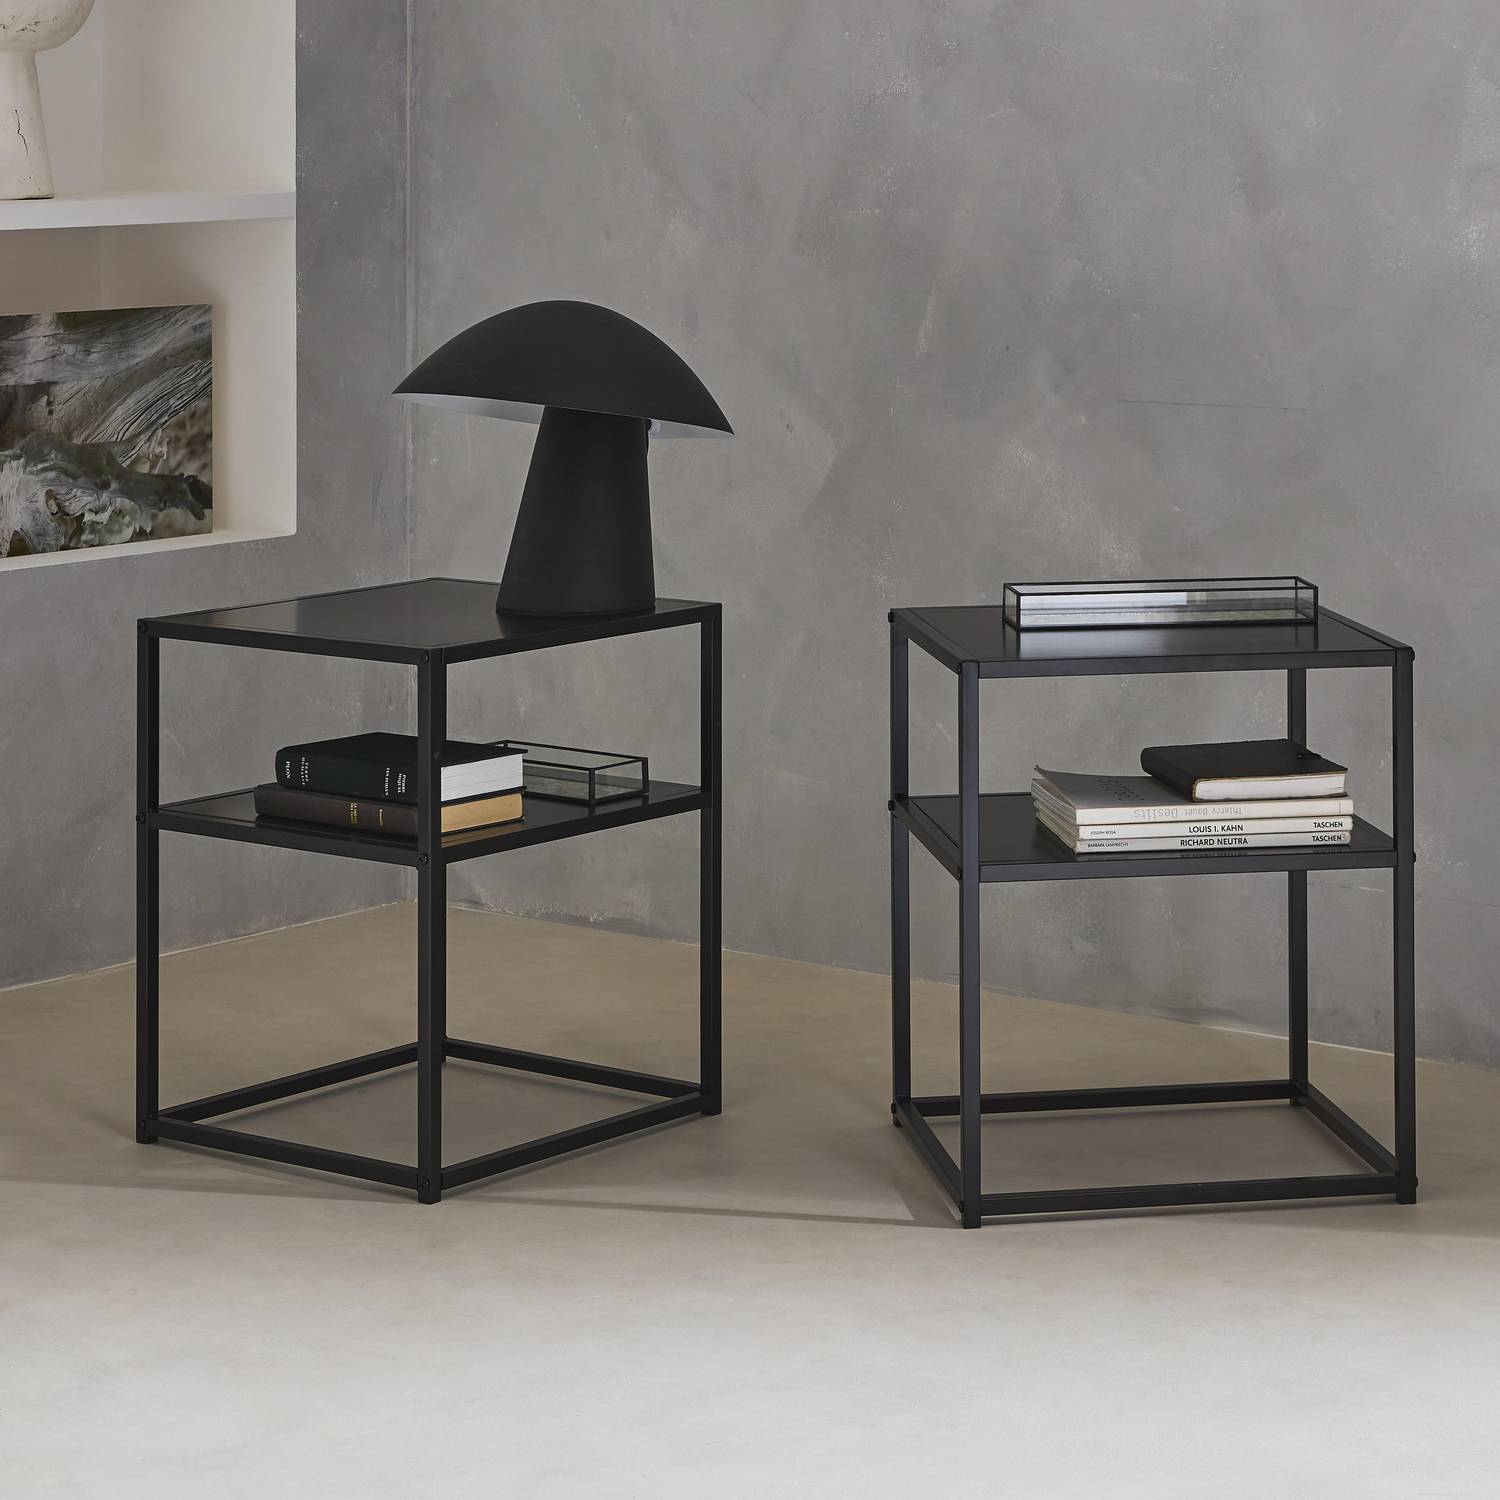 Set of 2 black metal bedside tables, 1 shelf, INDUSTRIAL L43xW40xH52cm Photo2